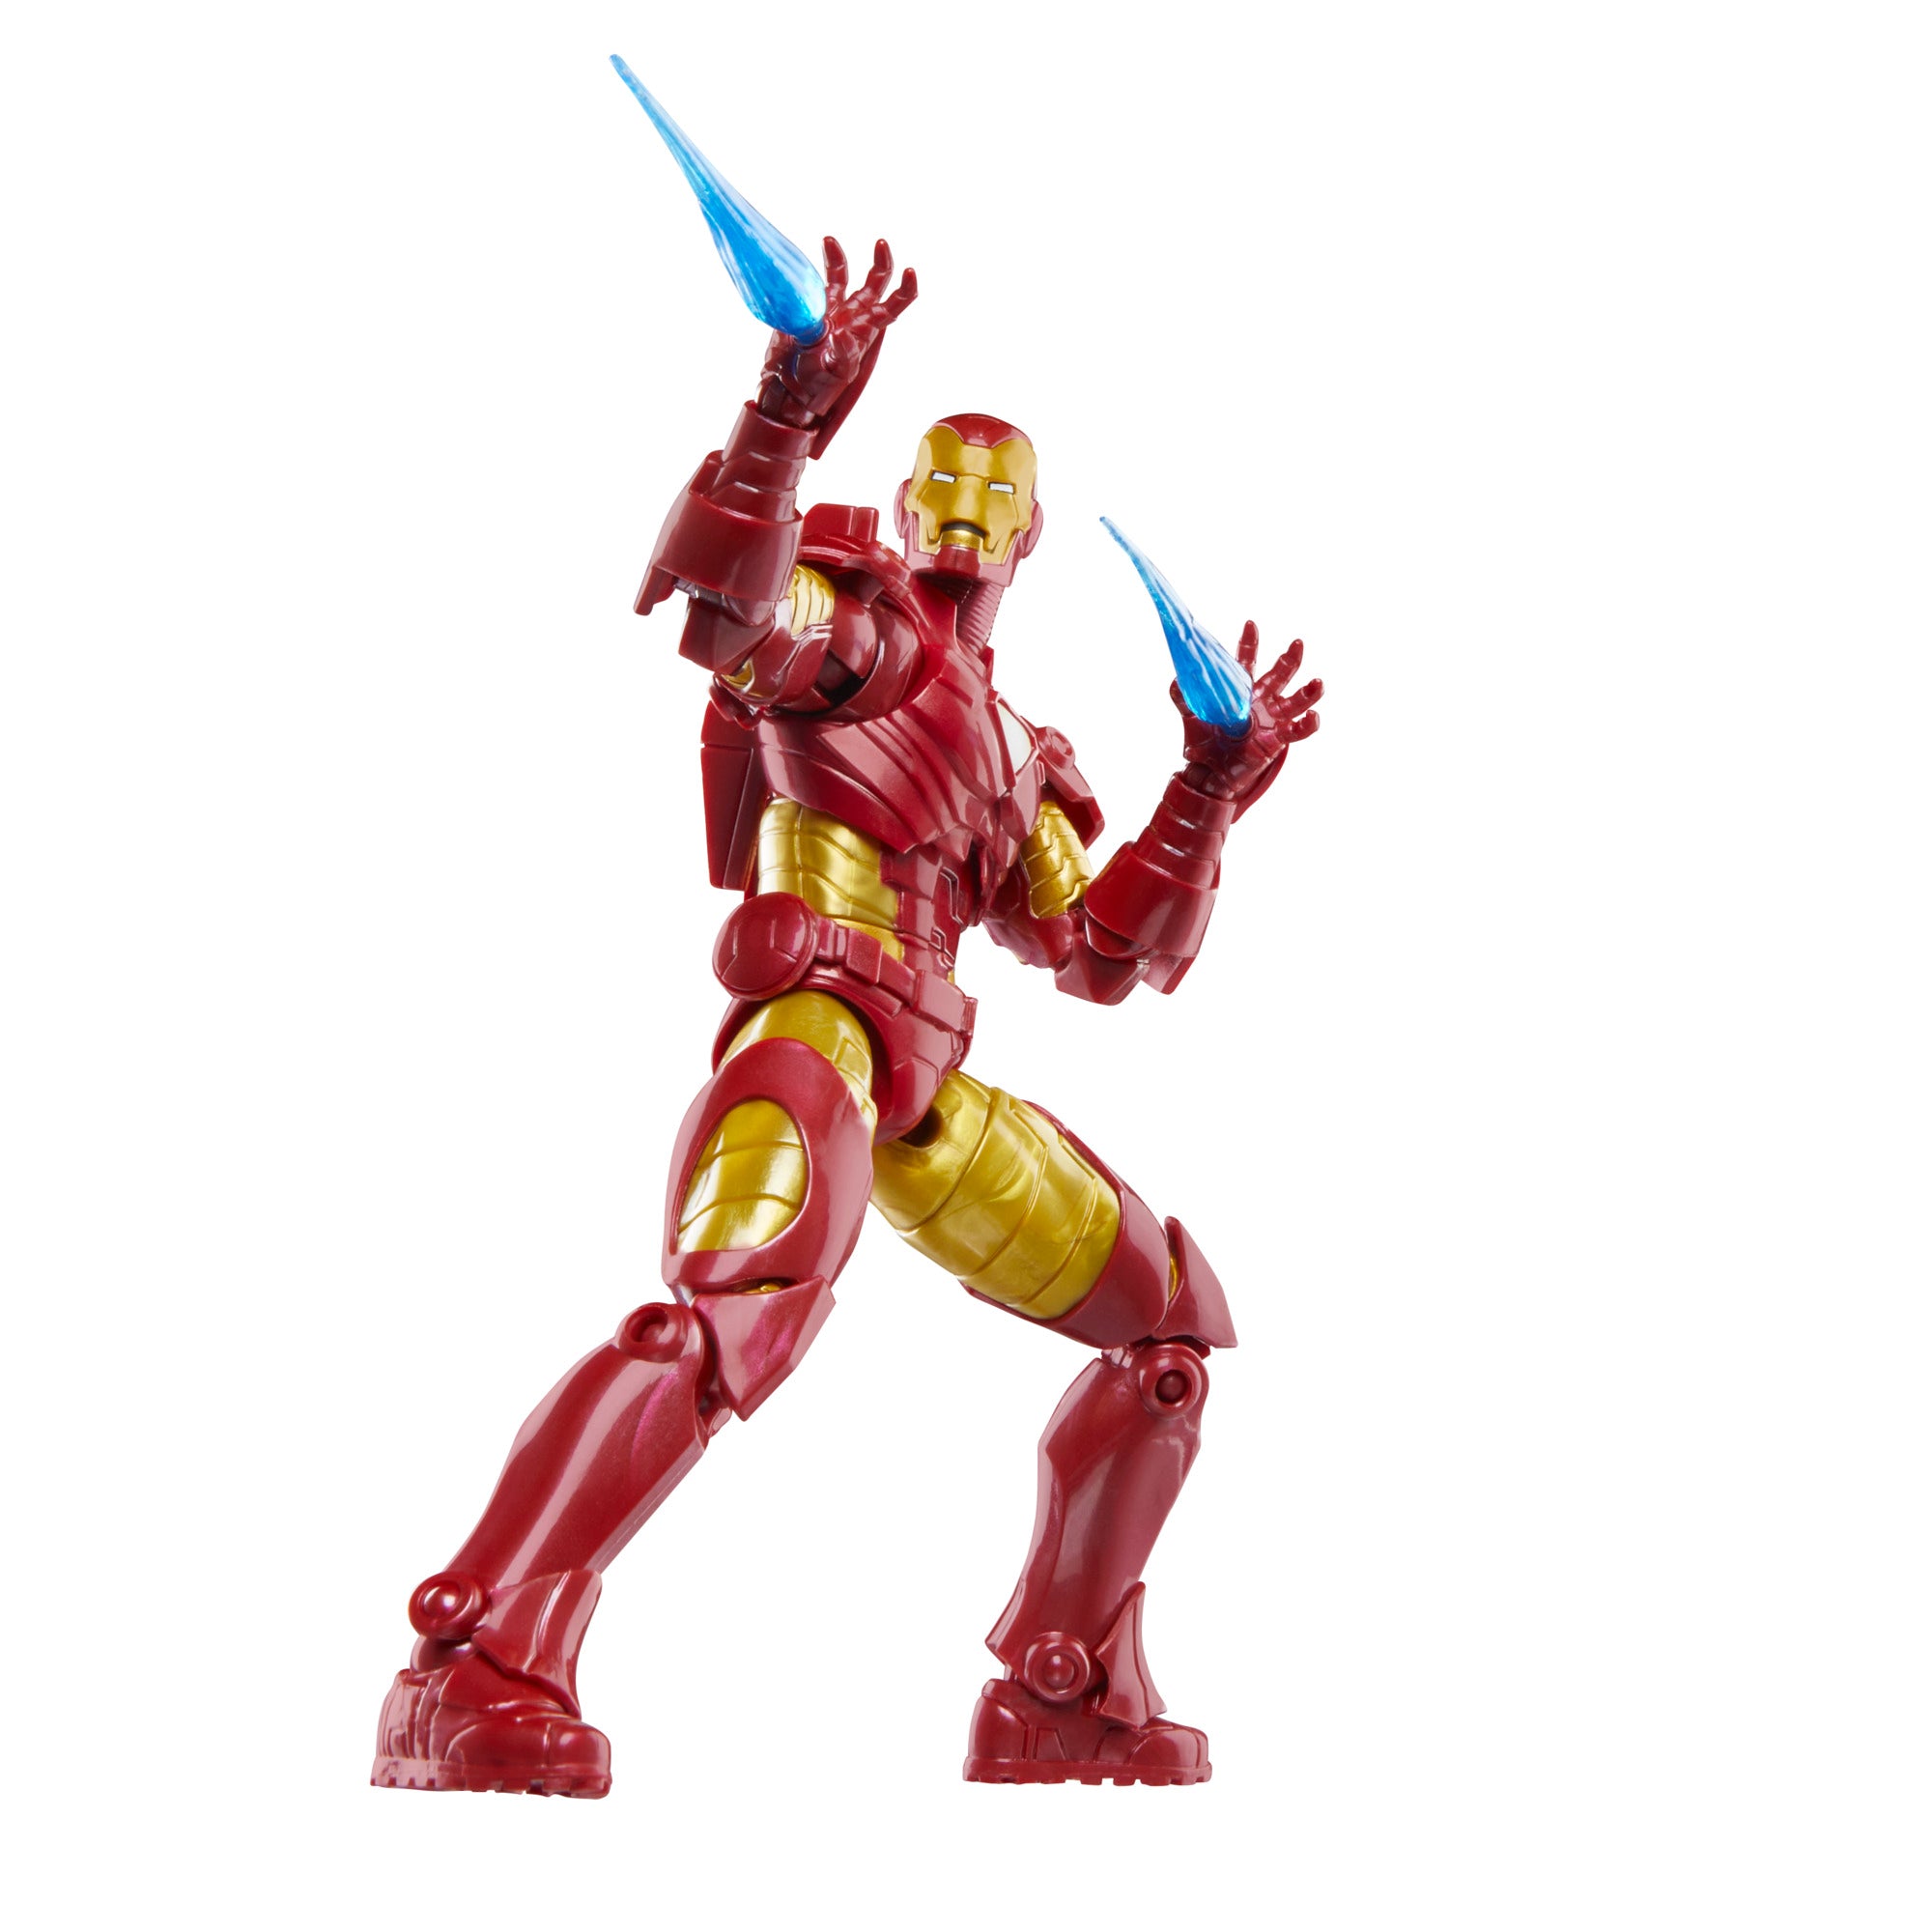 Marvel Legends Classic: Iron Man - Iron Man Modelo 20